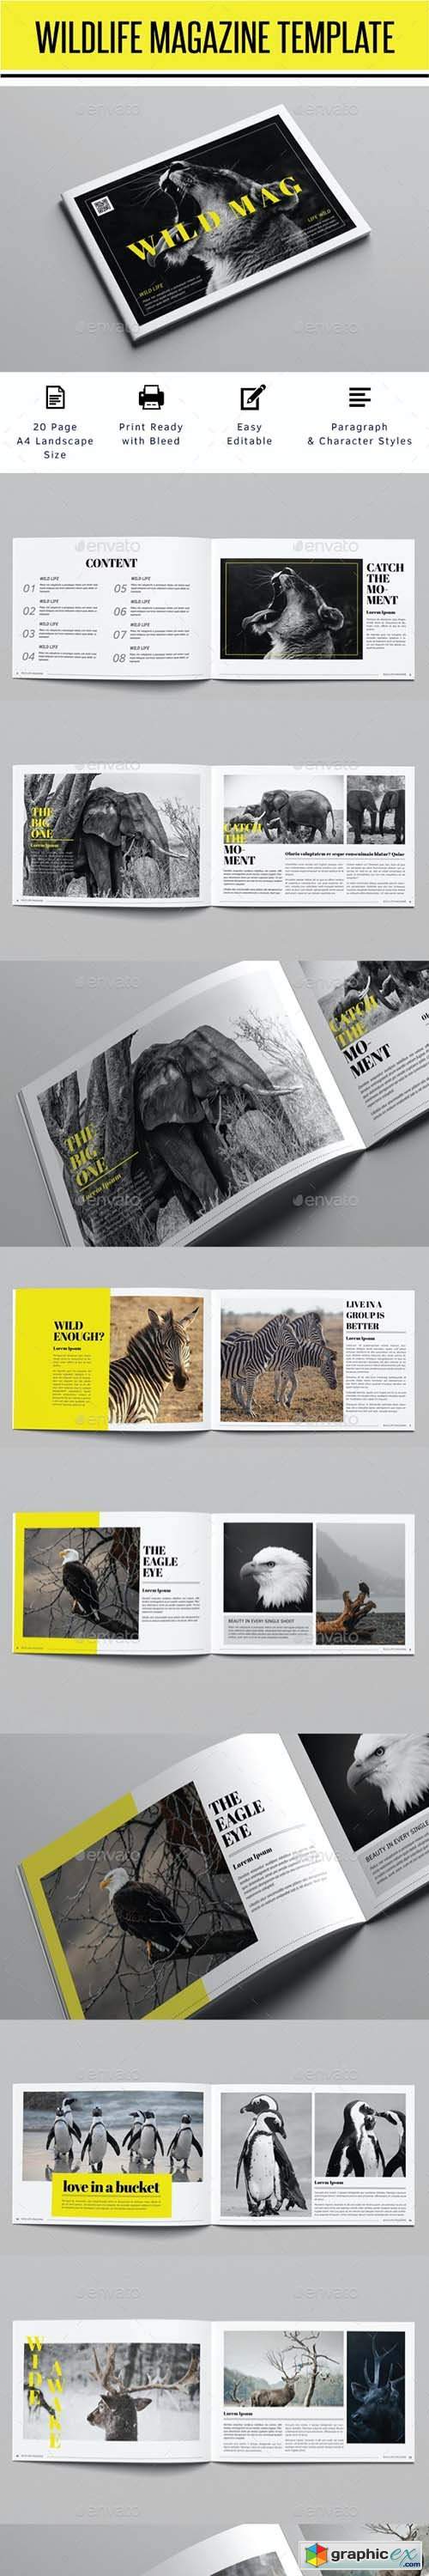 Wildlife Magazine Template 